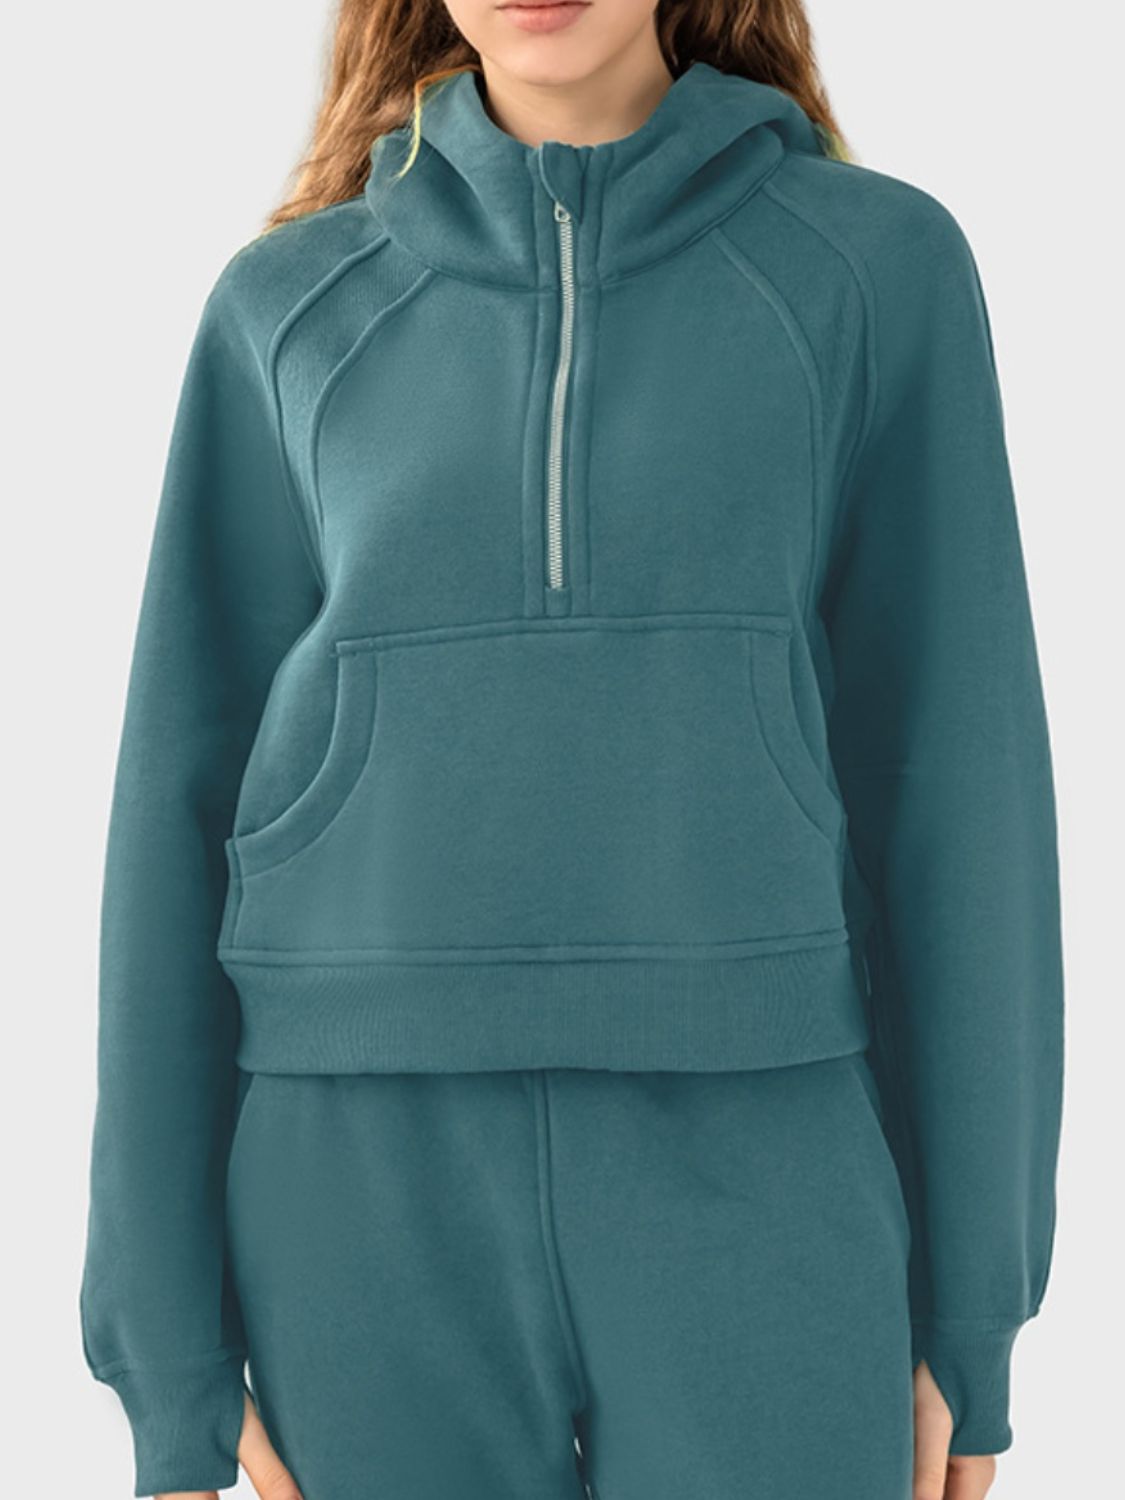 Half-Zip Long Sleeve Sports Hoodie - Fashion Girl Online Store